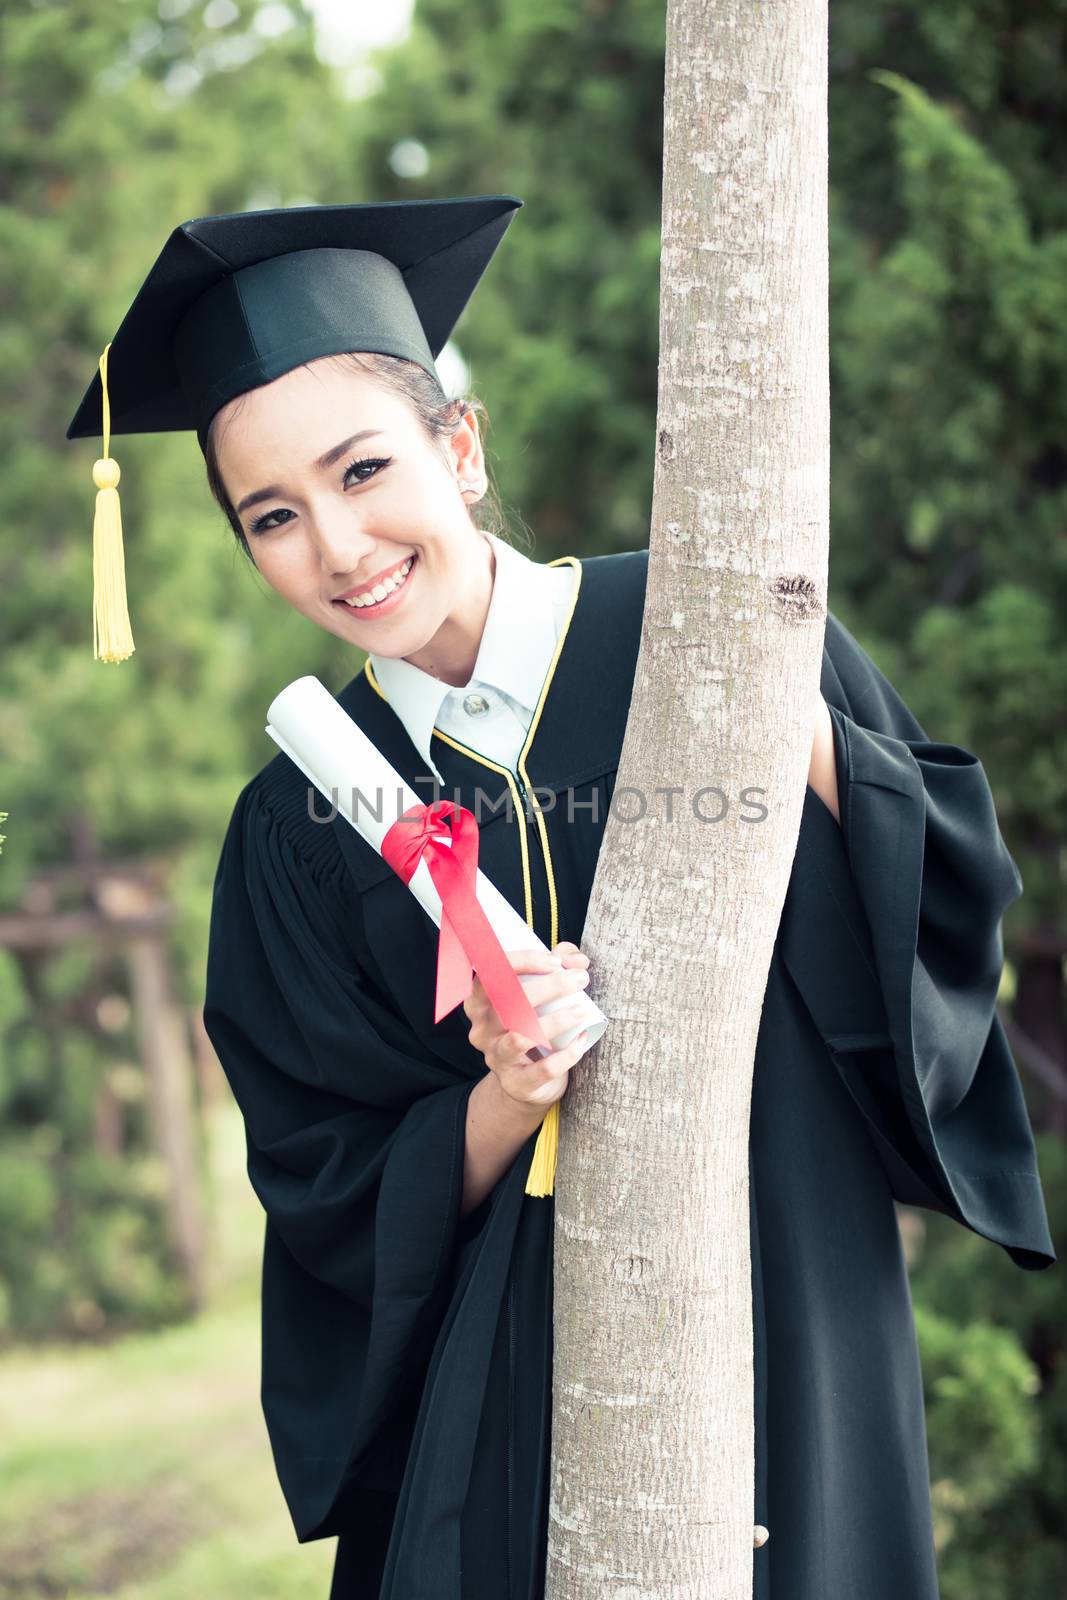 Happy graduated student girl, congratulations - graduate education success - concept education.